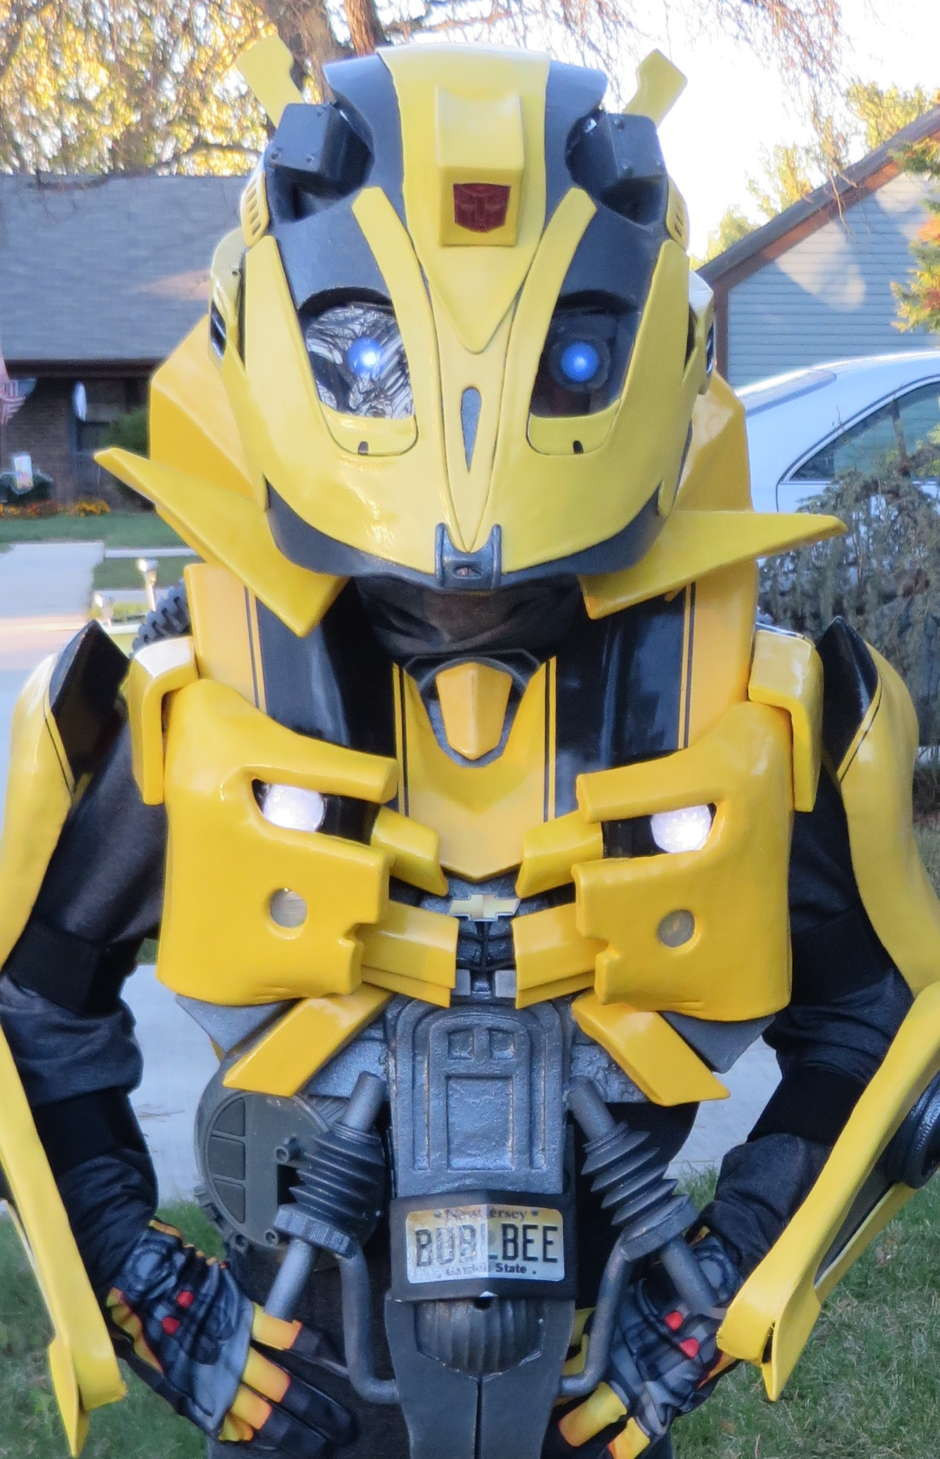 DIY Bumblebee Transformer Costume
 Epic DIY Kids Bumblebee Transformers Costume